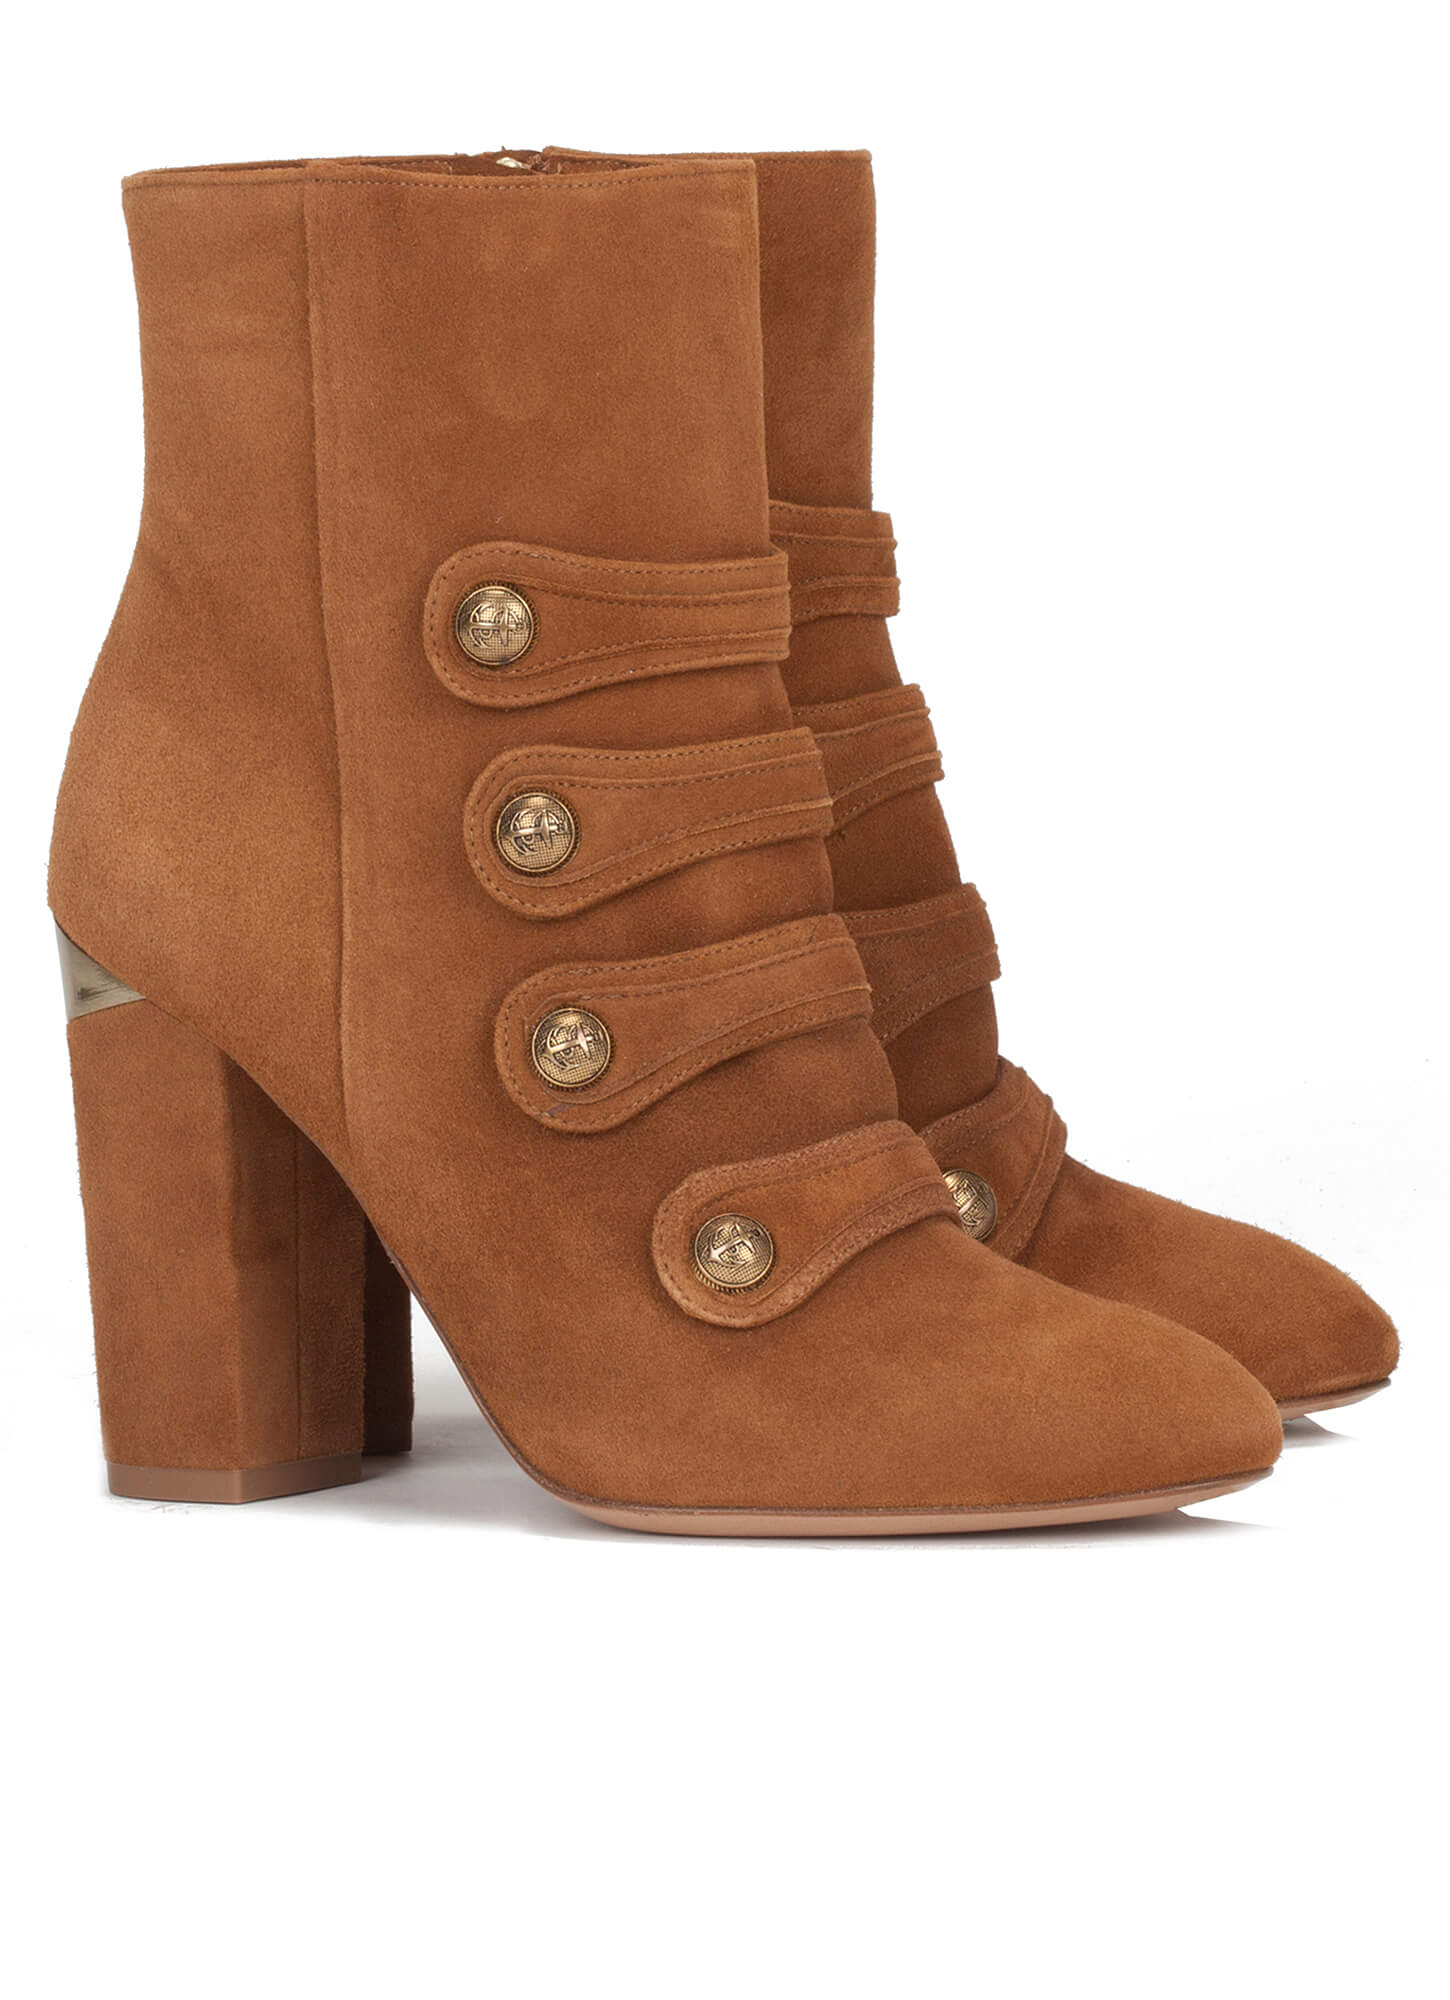 Chestnut high block heel ankle boots - online shoe store Pura Lopez ...